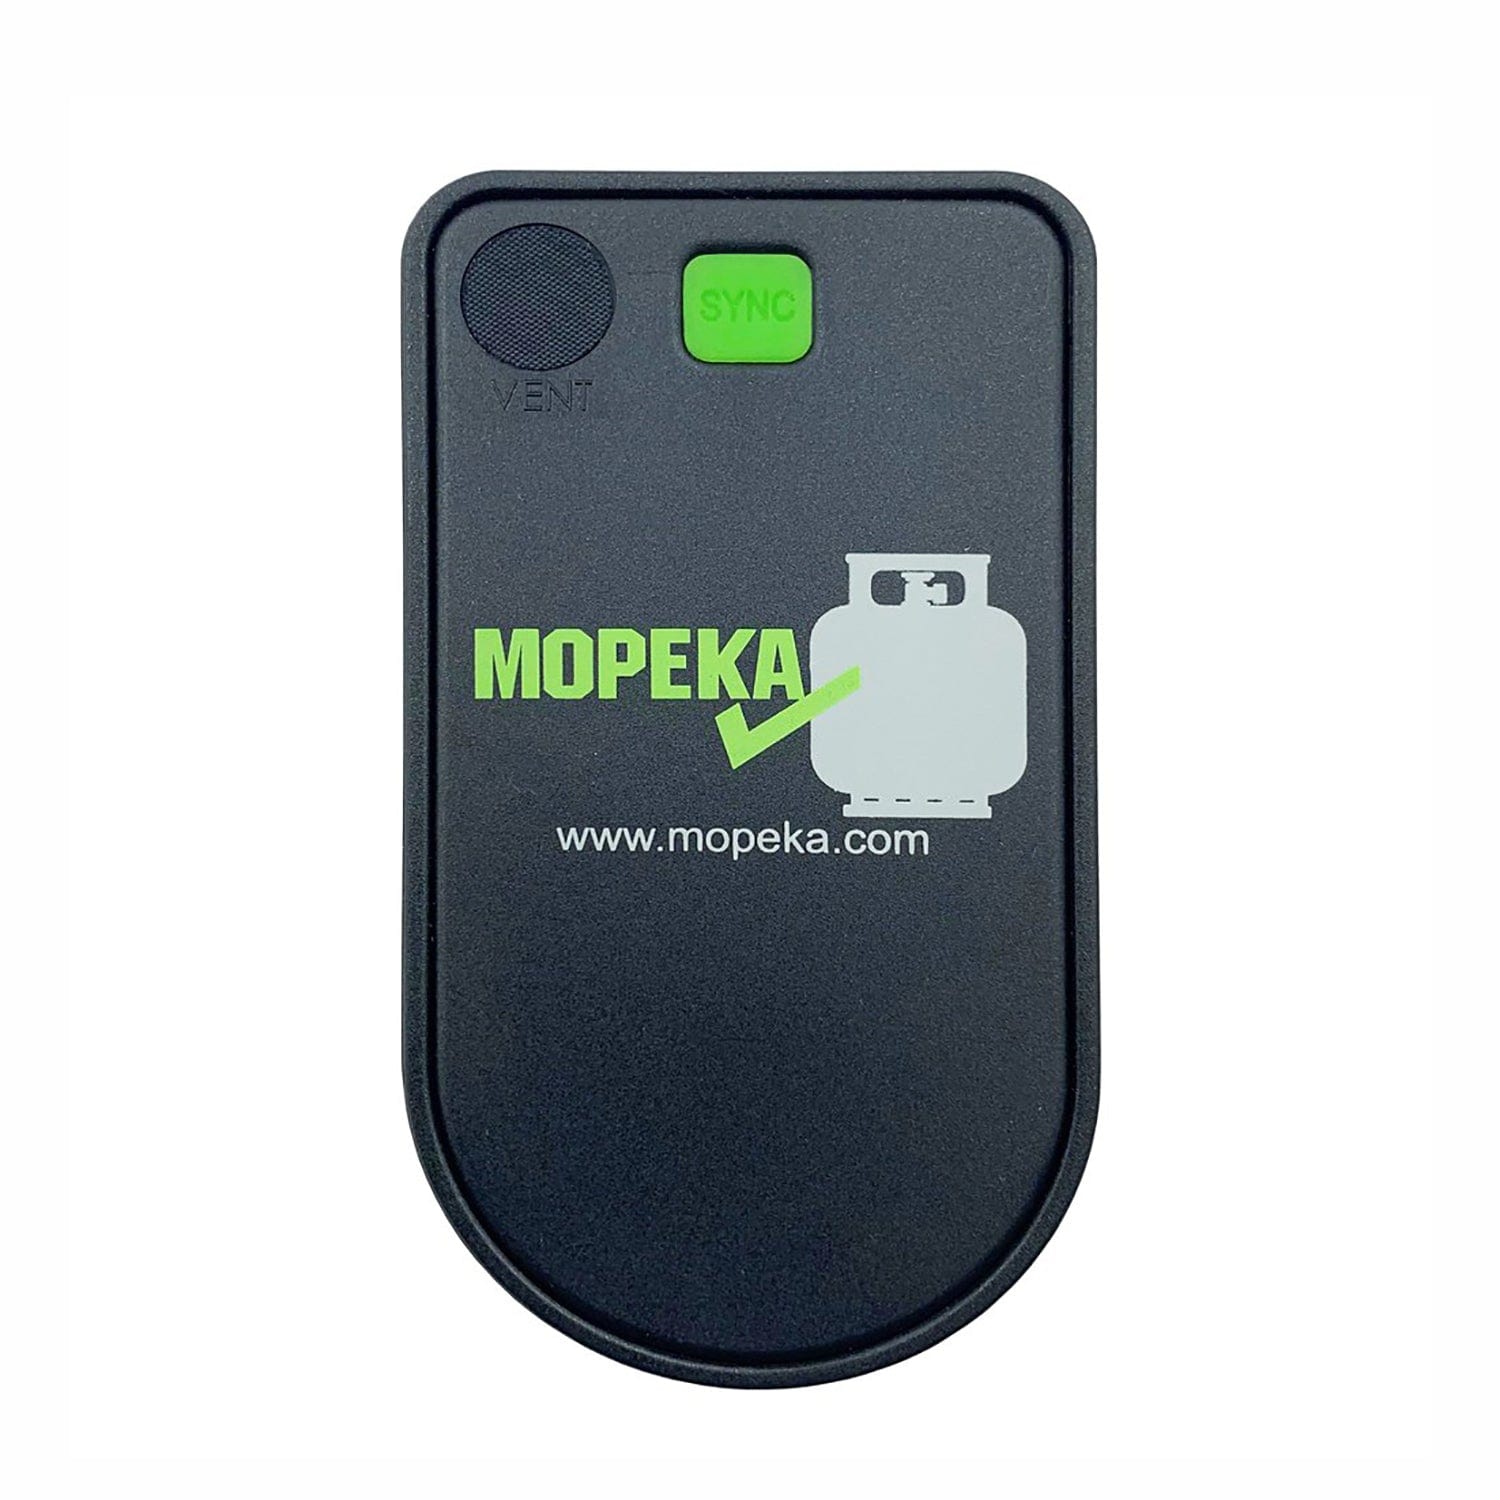 Mopeka Tank Check Remote Bluetooth Gas Bottle Level Sender